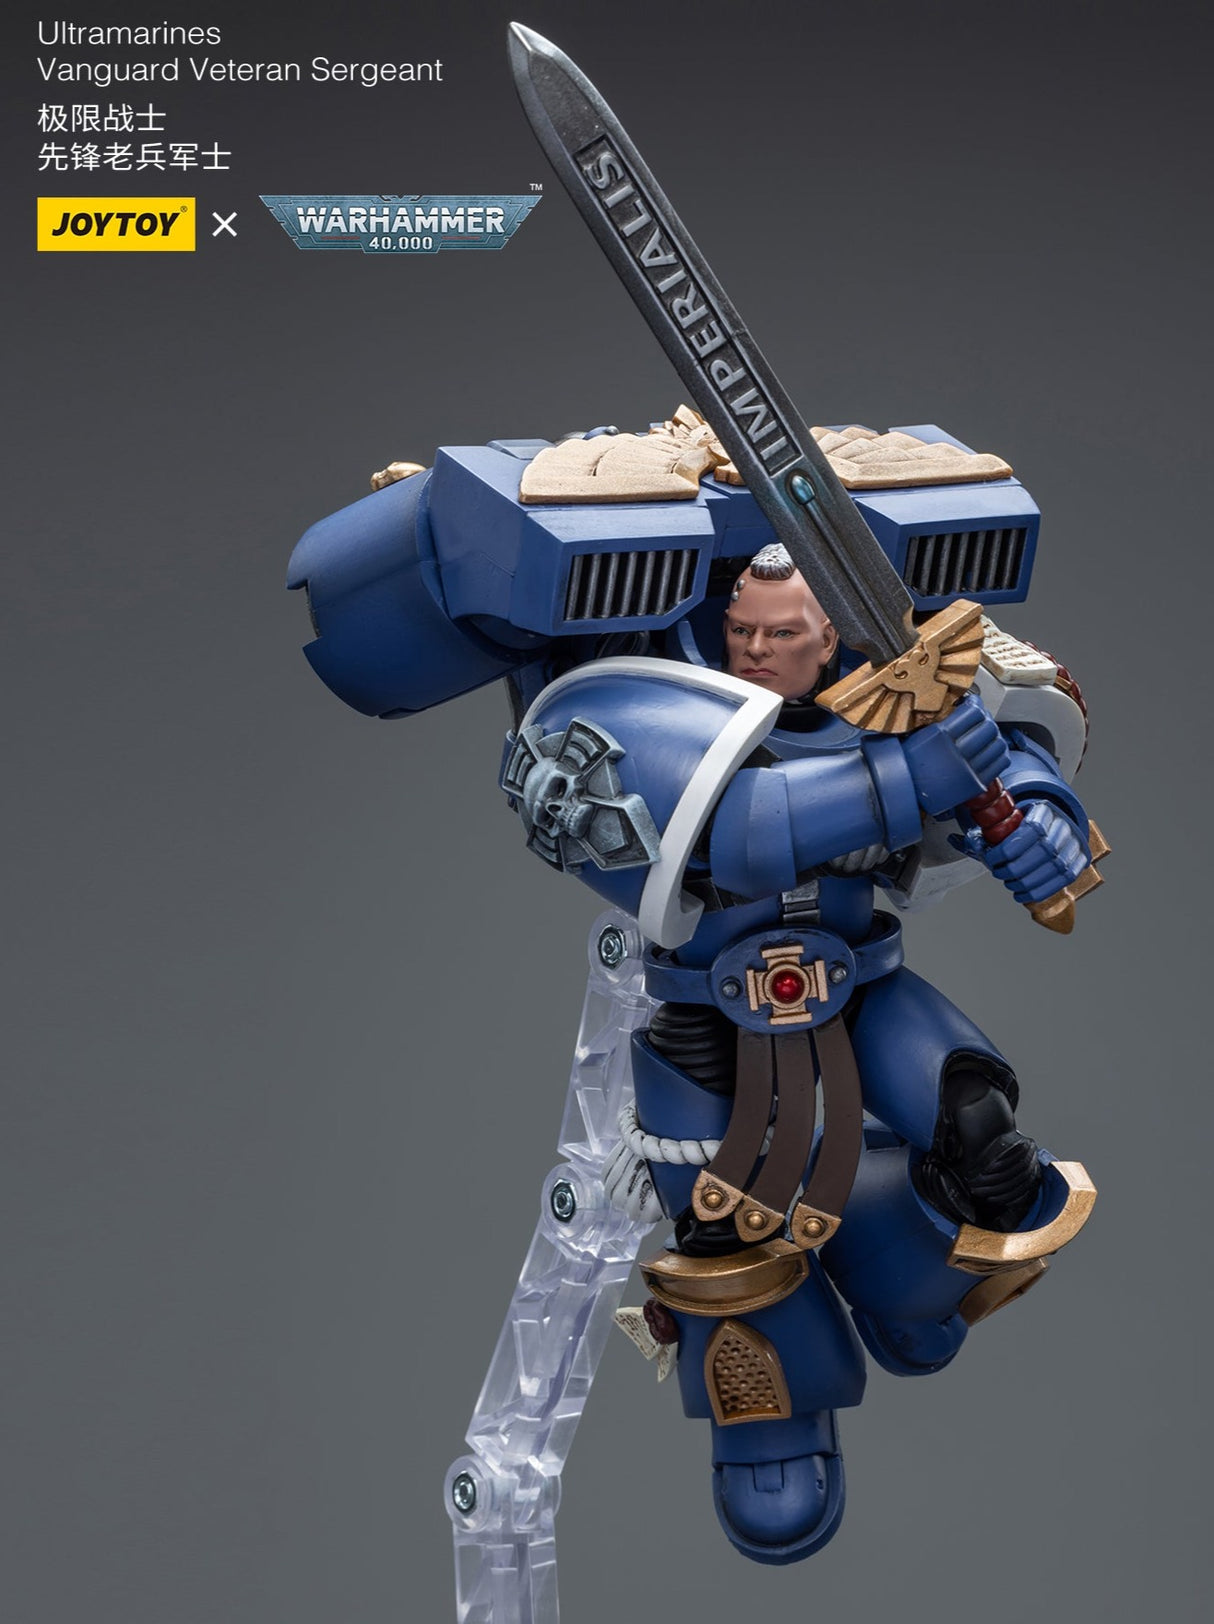 Warhammer 40k: Ultramarines: Vanguard Veteran Sergeant-Joy Toy